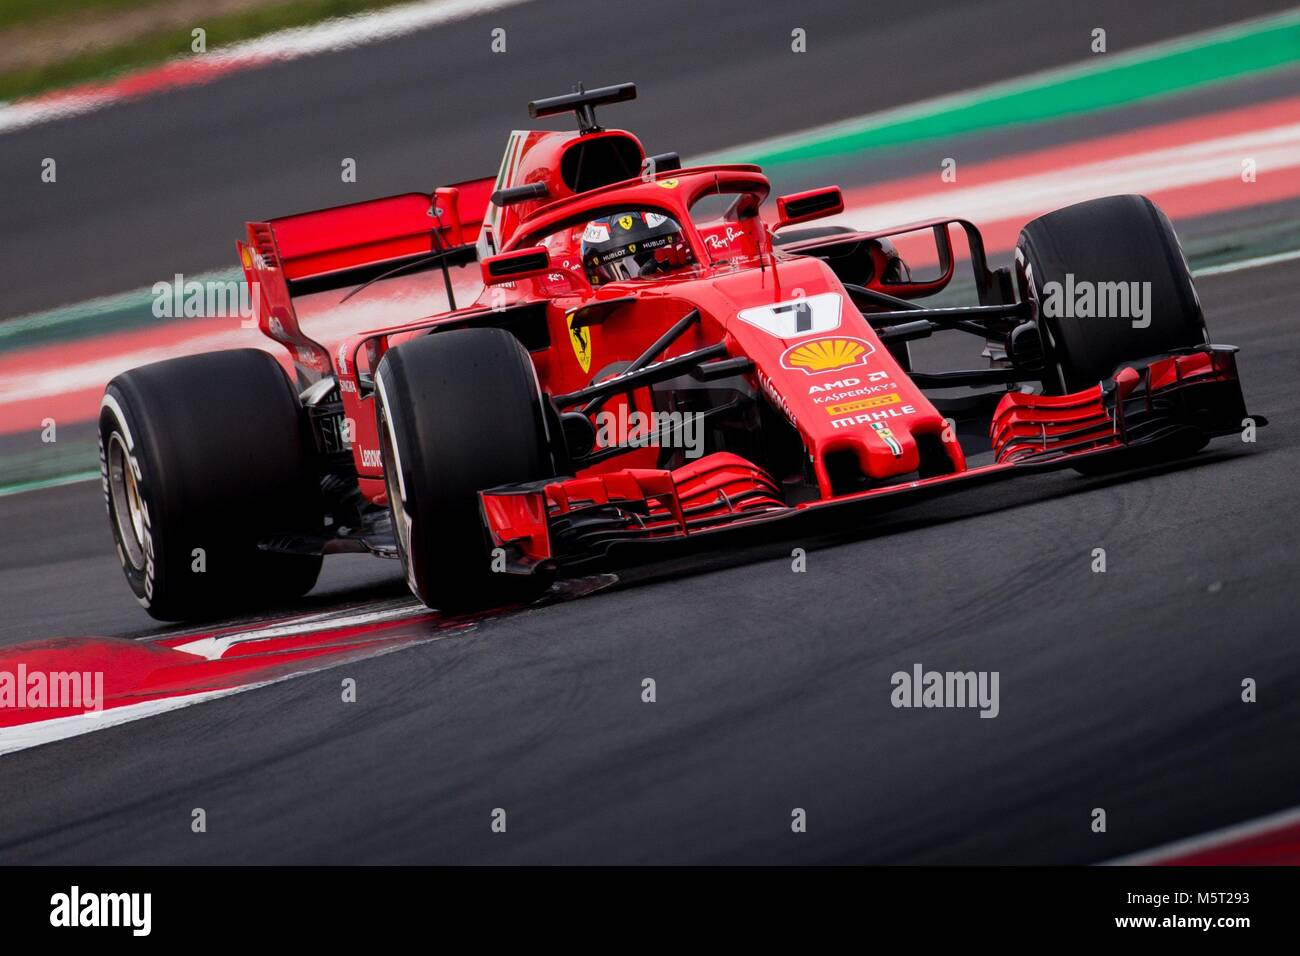 Ferrari Formula One Finnish Driver Kimi Raikkonen Steers His Car Stock Photo Alamy